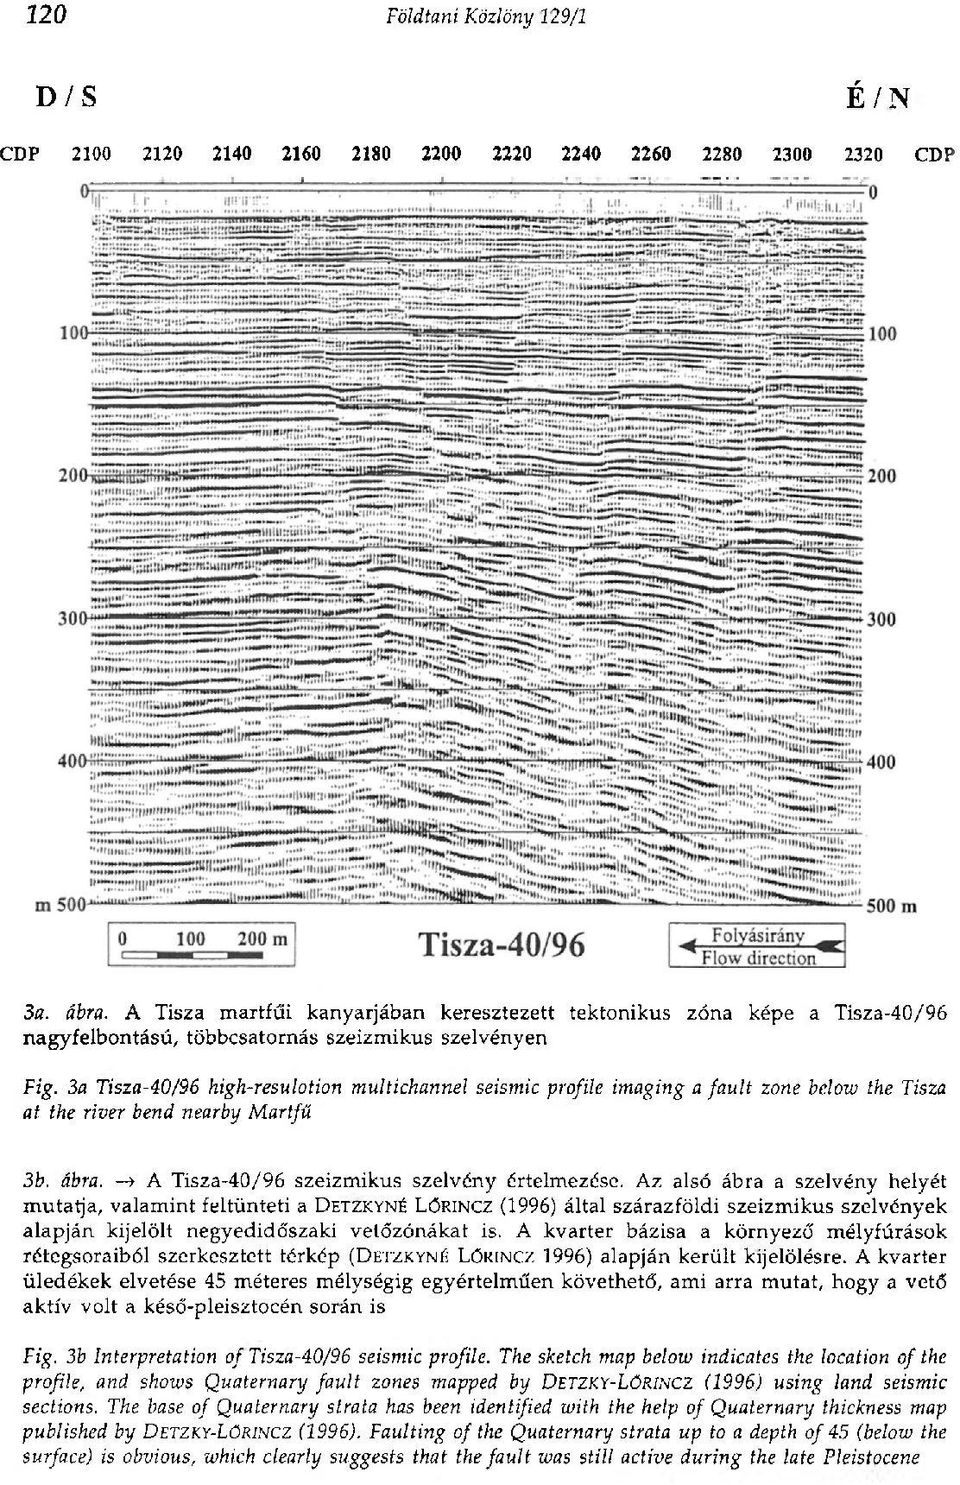 За Tisza-40/96 high-resulotion multichannel seismic profile imaging a fault zone below the Tisza at the river bend nearby Martfű 3b. ábra. > A Tisza-40/96 szeizmikus szelvény értelmezése.